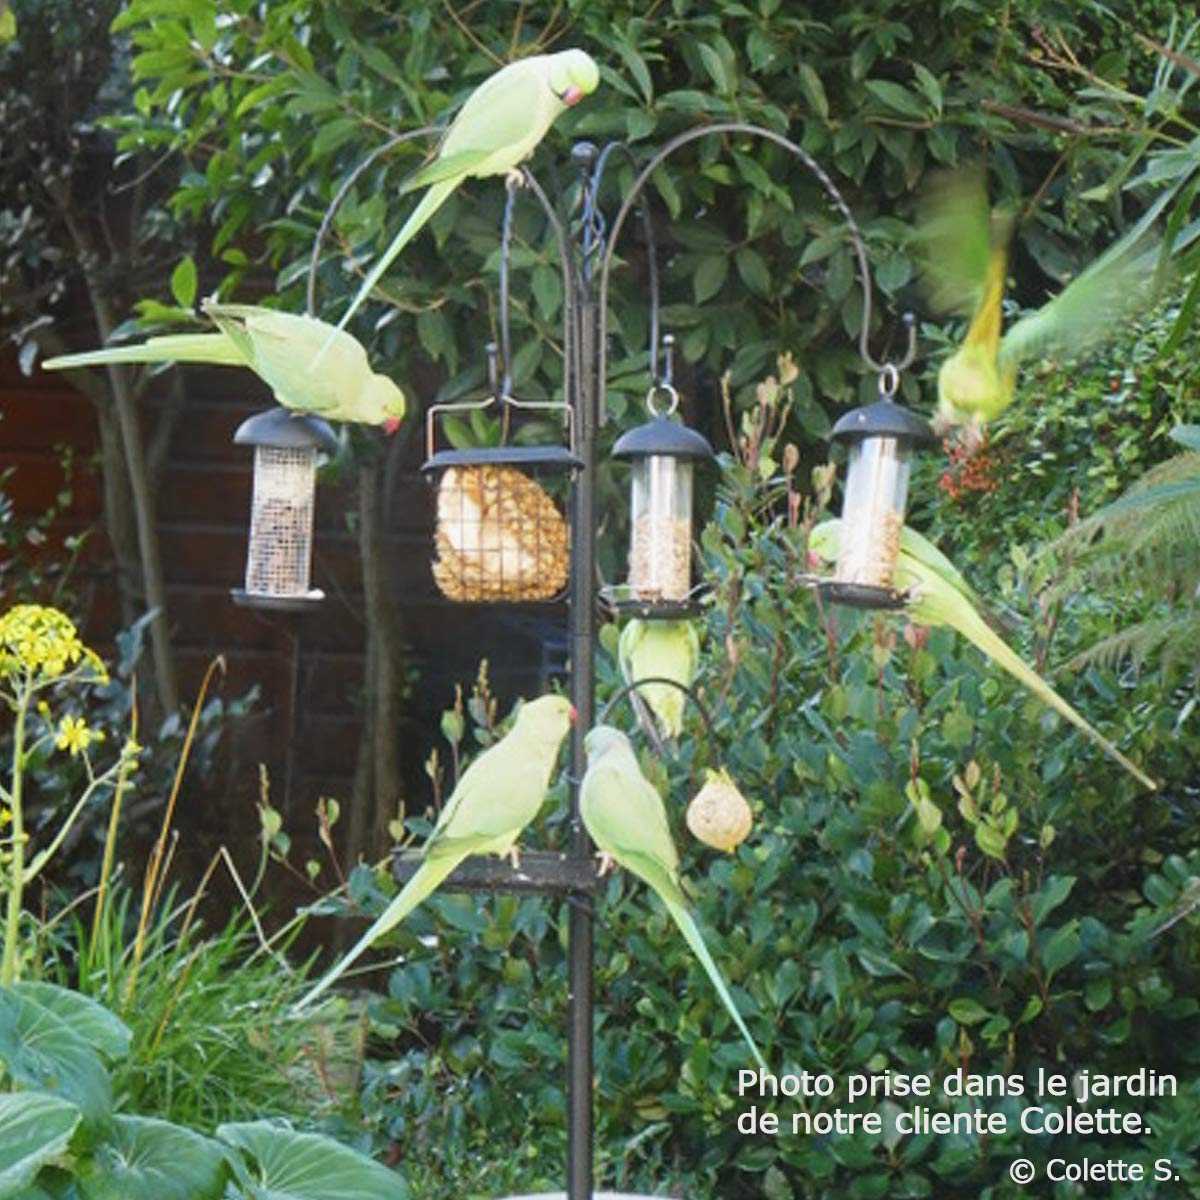 Kingfisher natures marché Oiseaux Sauvages Cacahuète Mangeoire Jardin suspendu rouge 